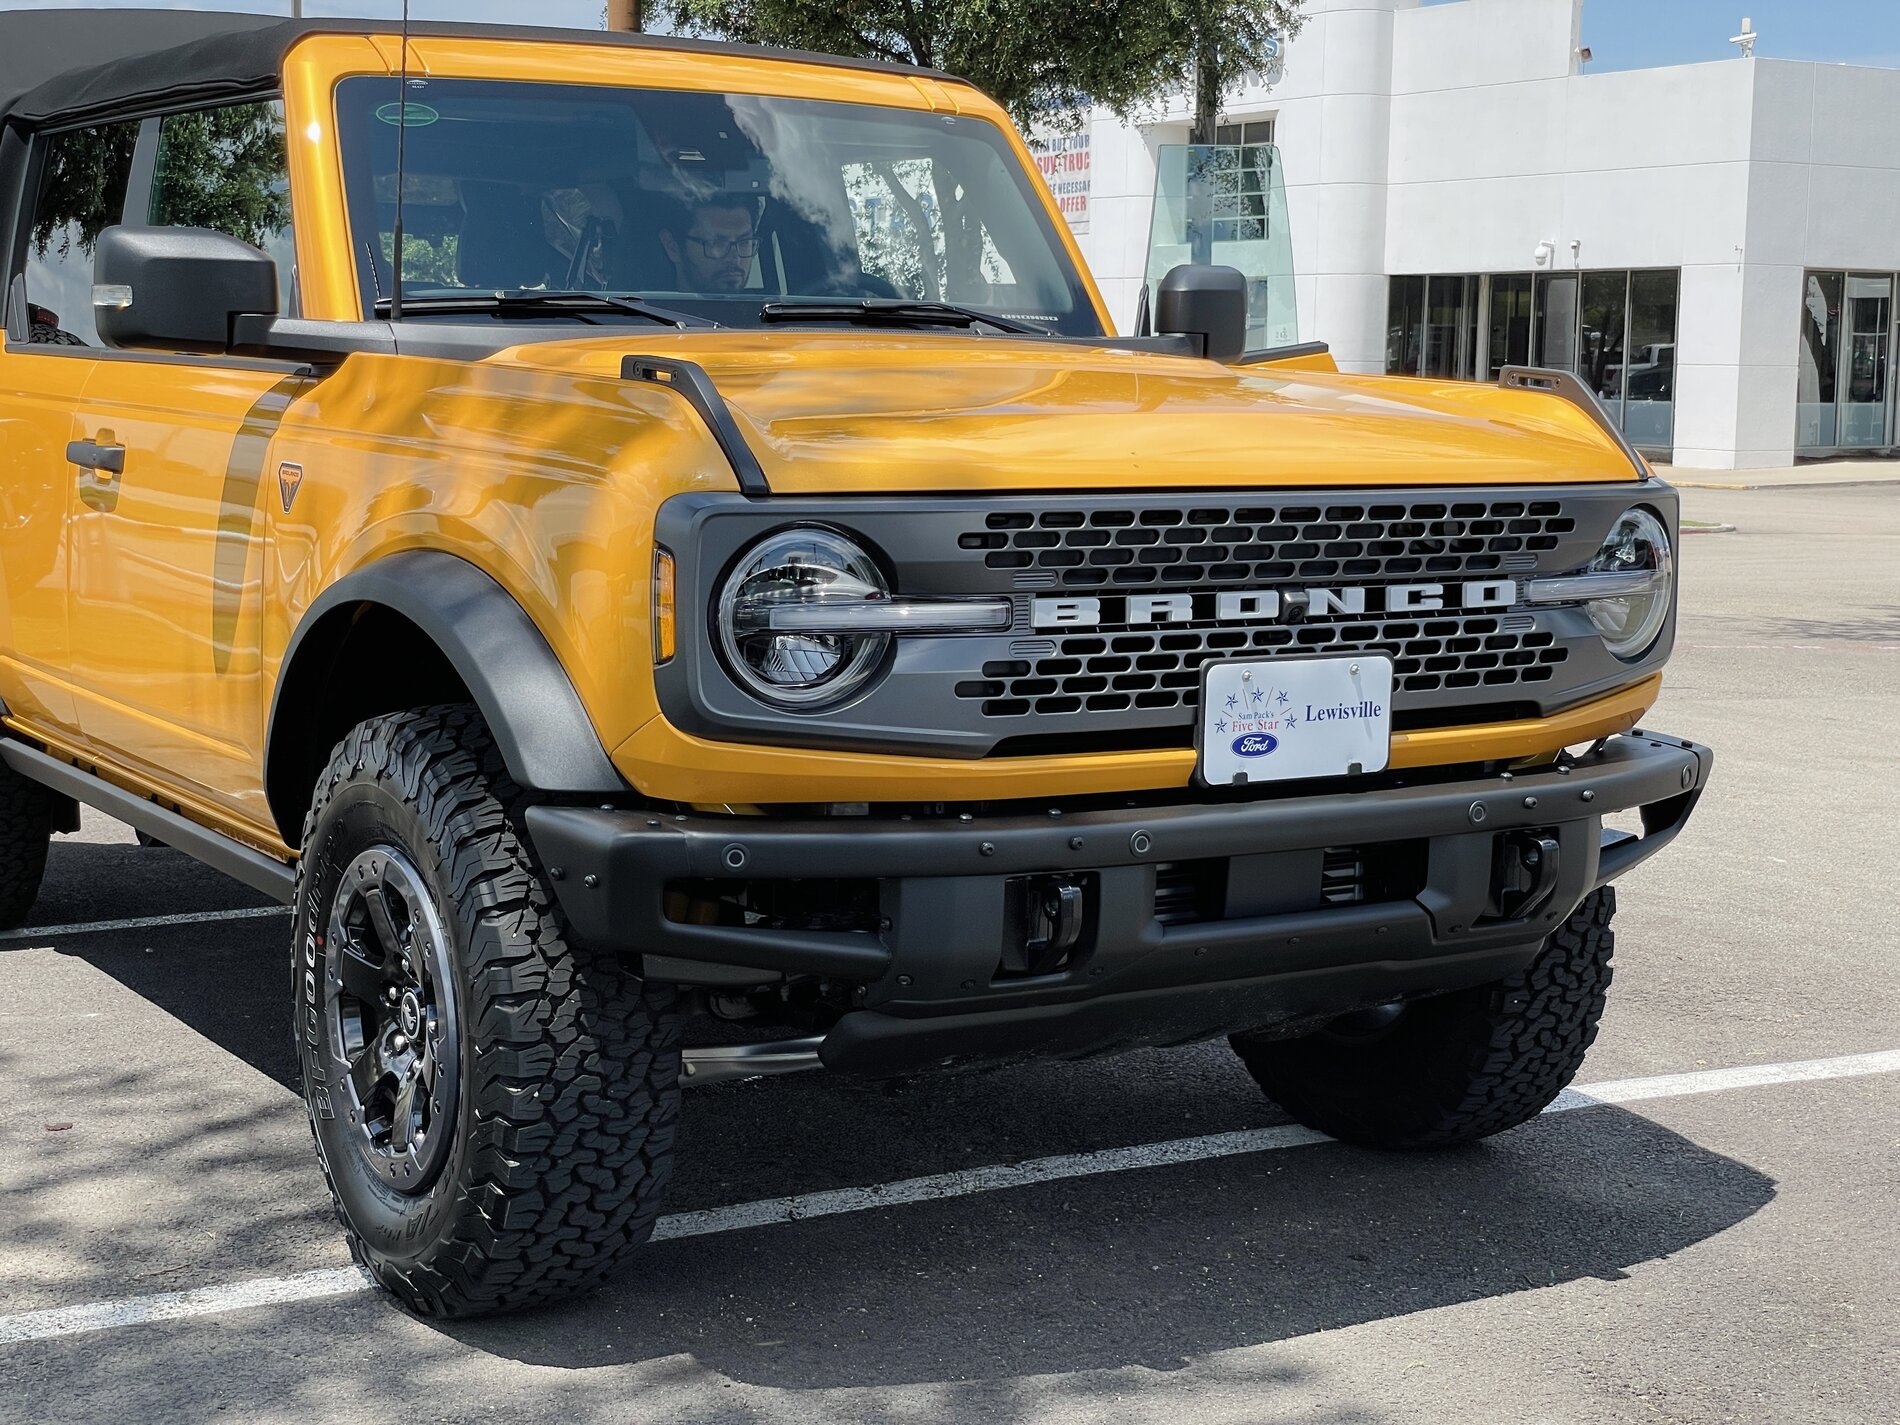 Ford Bronco Texas Dealer Demo's for Test Drives (Mannequin's) IMG_20210716_175614